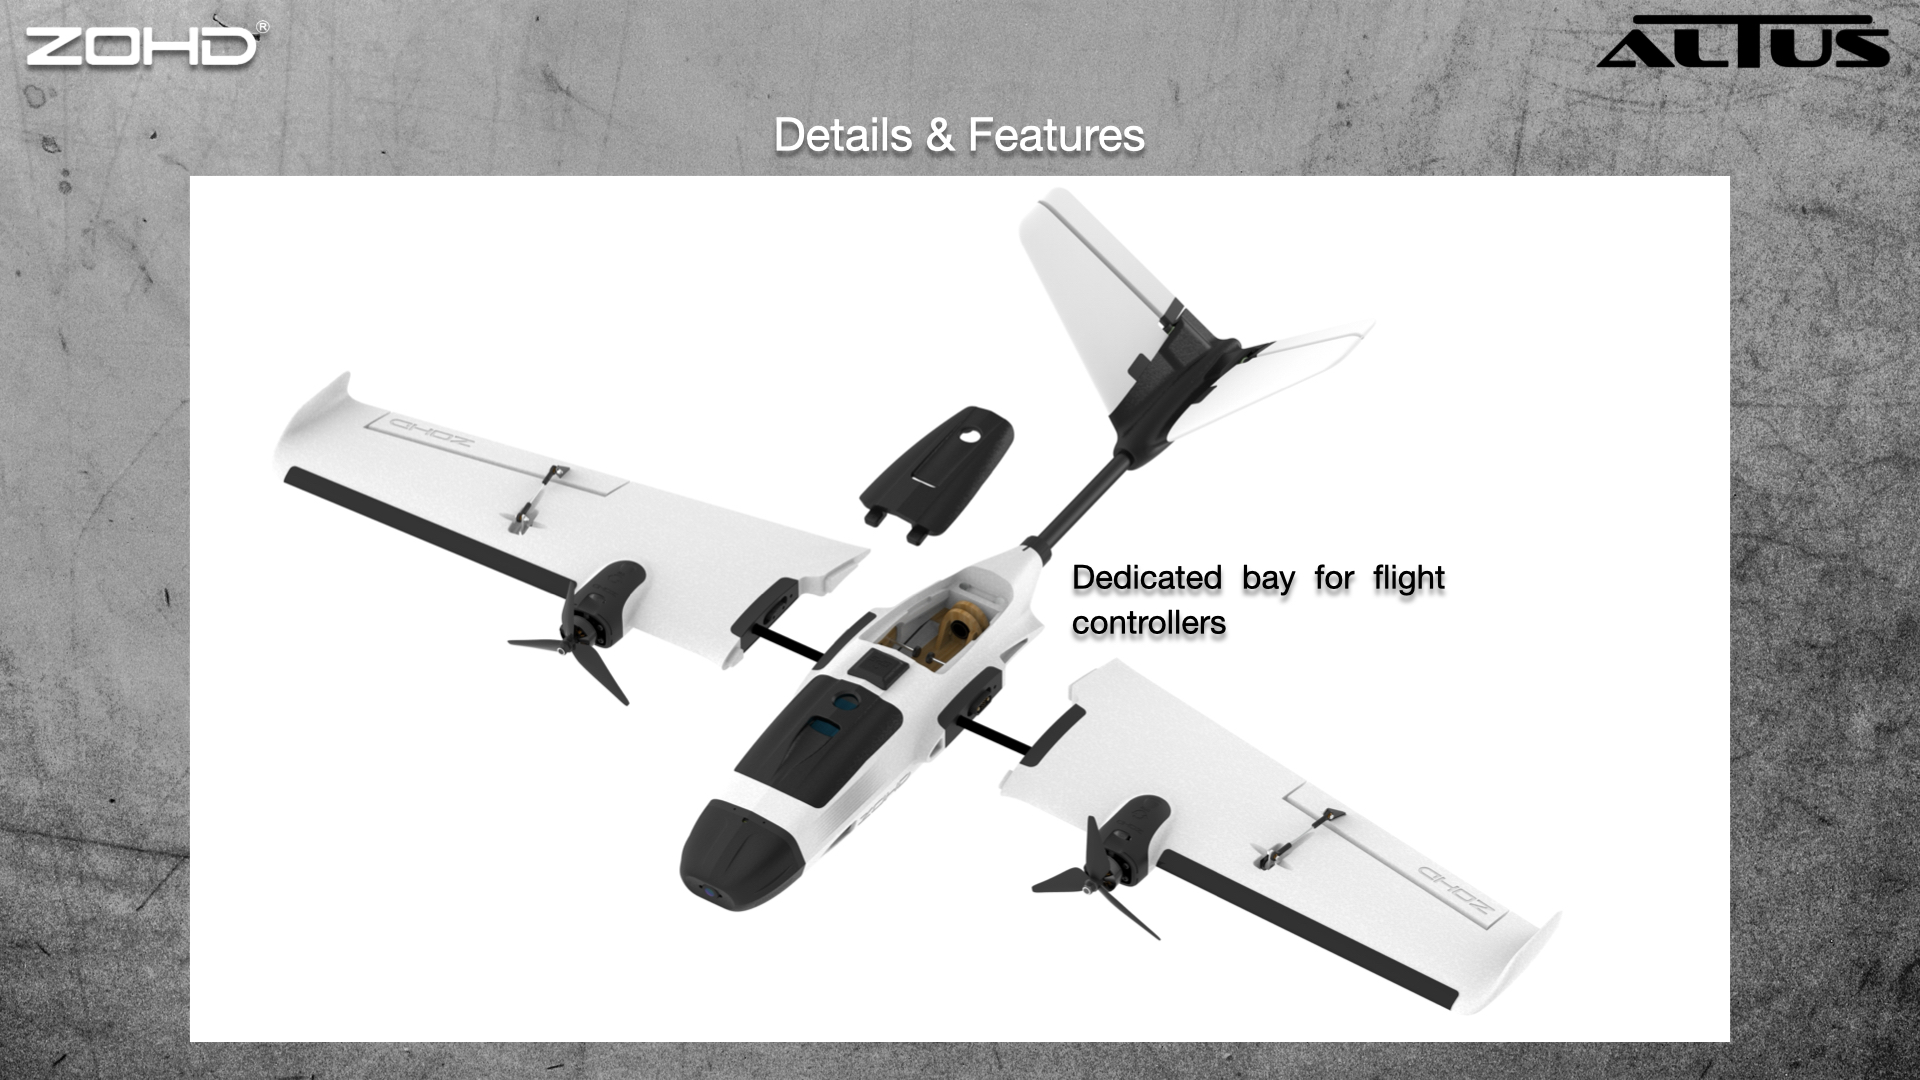 ZOHD Altus 980mm Wingspan Twin Motor V-Tail EPP FPV RC Airplane KIT/PNP Reserved VTOL Capability Compatible GoPro/DJI/Runcam HD Action Cameras